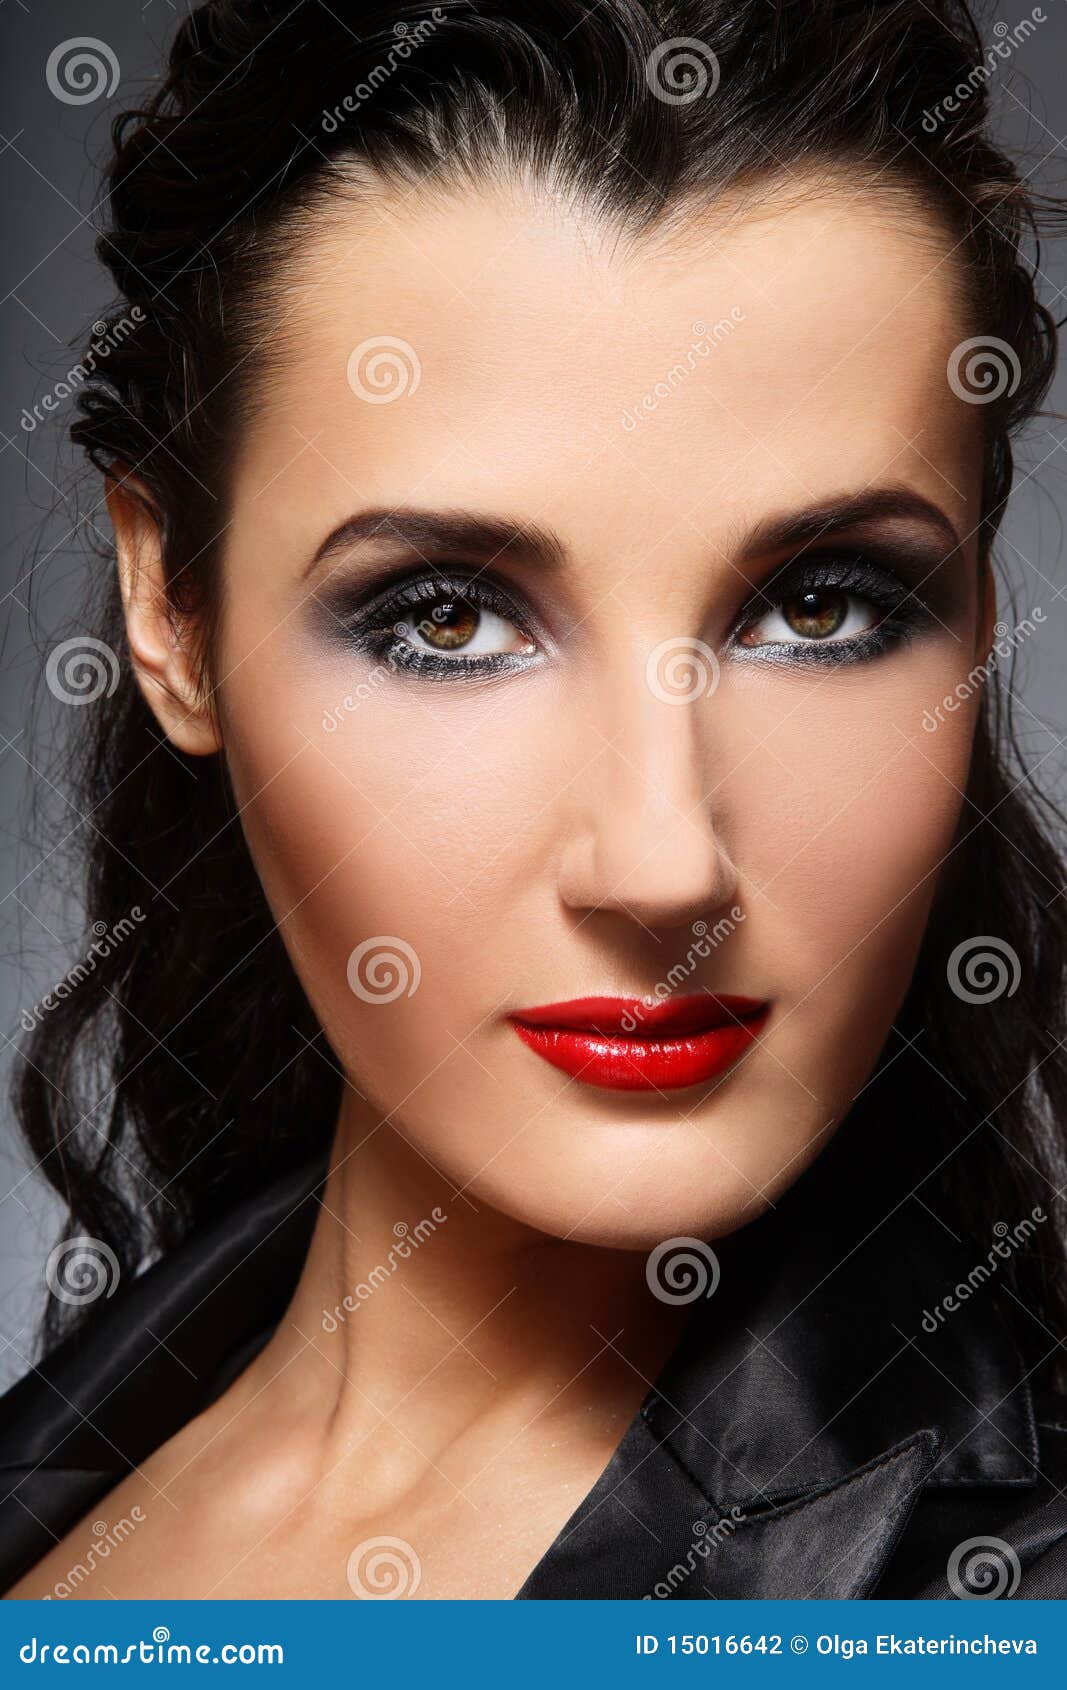 Glamorous woman stock photo. Image of lipstick, groomed - 15016642